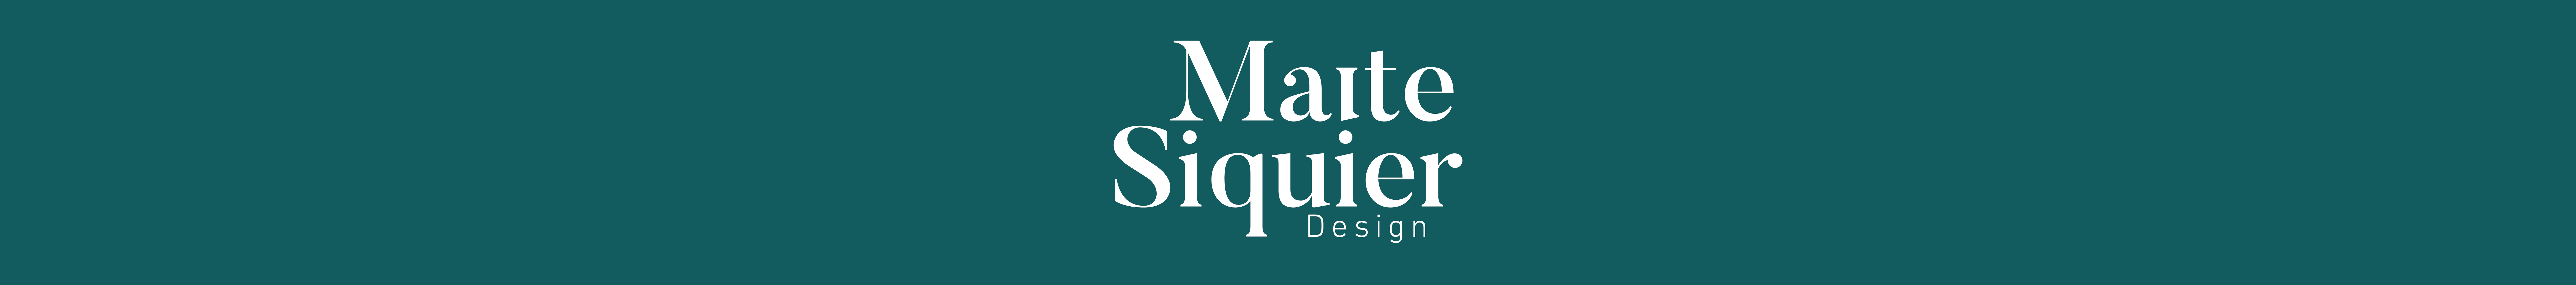 Maite Siquier's profile banner